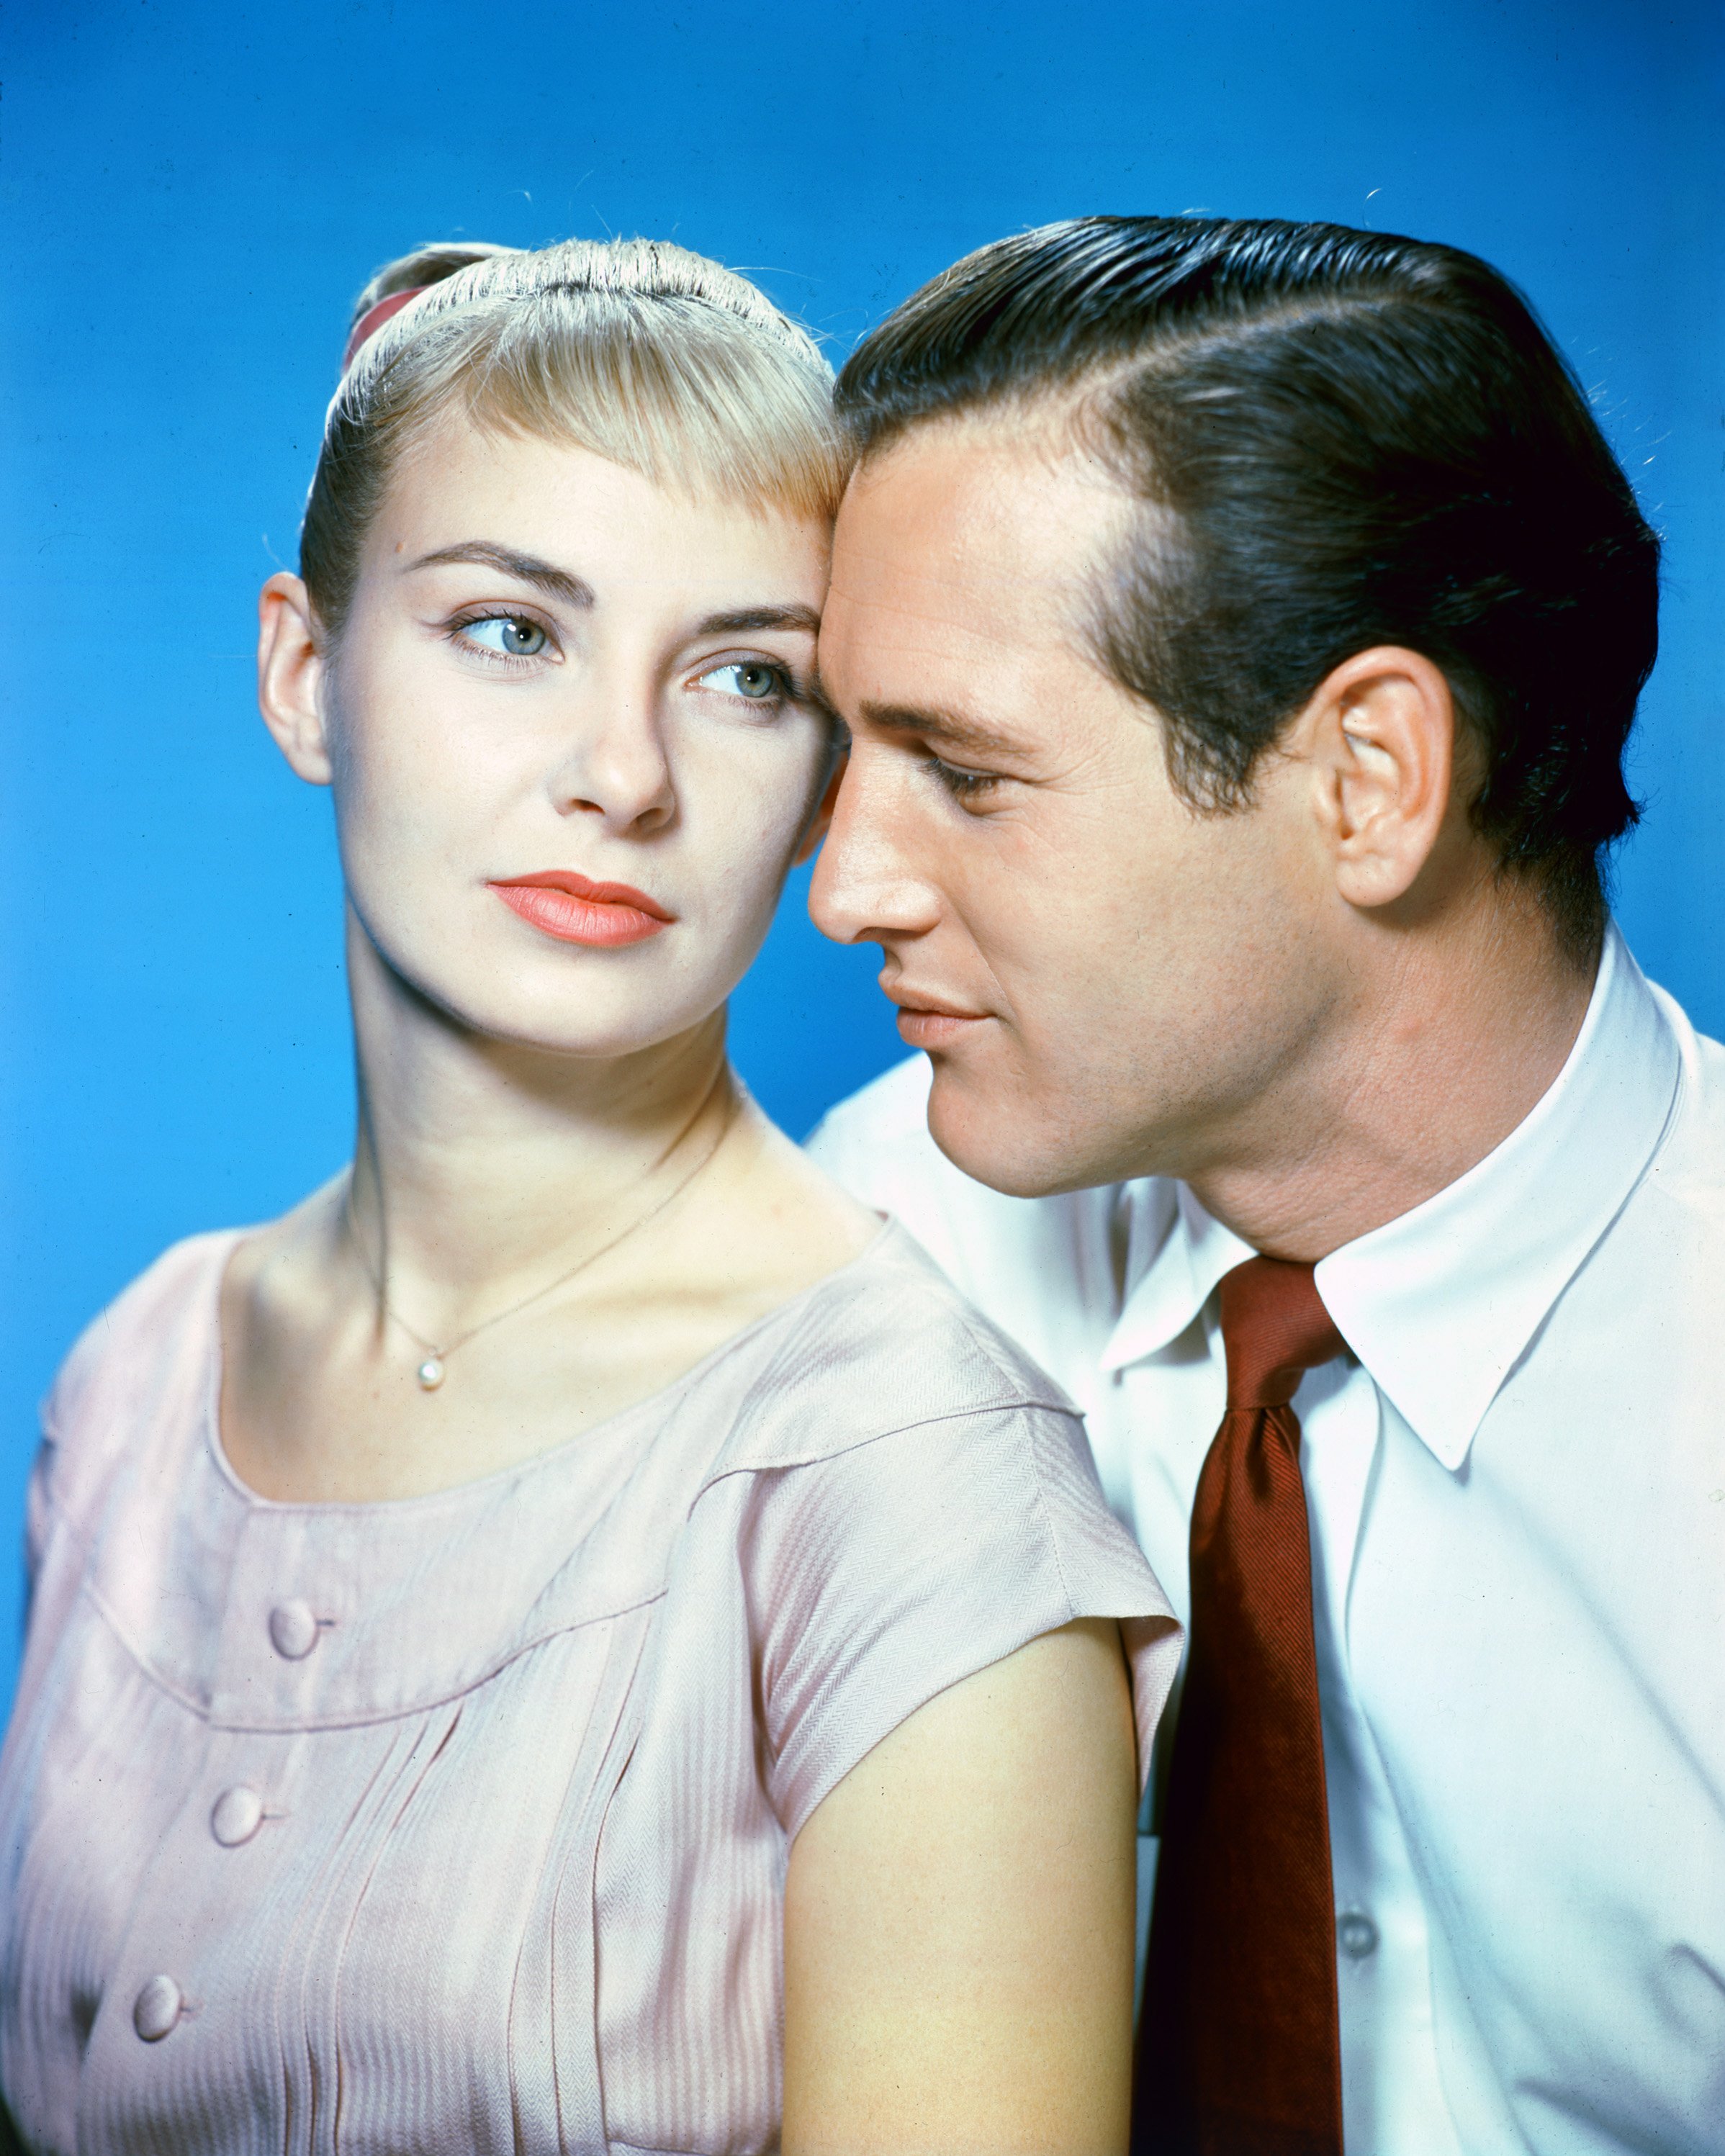 Joanne Woodward, US-amerikanische Schauspielerin, und Paul Newman (1925-2008), US-amerikanischer Schauspieler, in einem Studioporträt "The Long Hot Summer", 1958. | Quelle: Getty Images